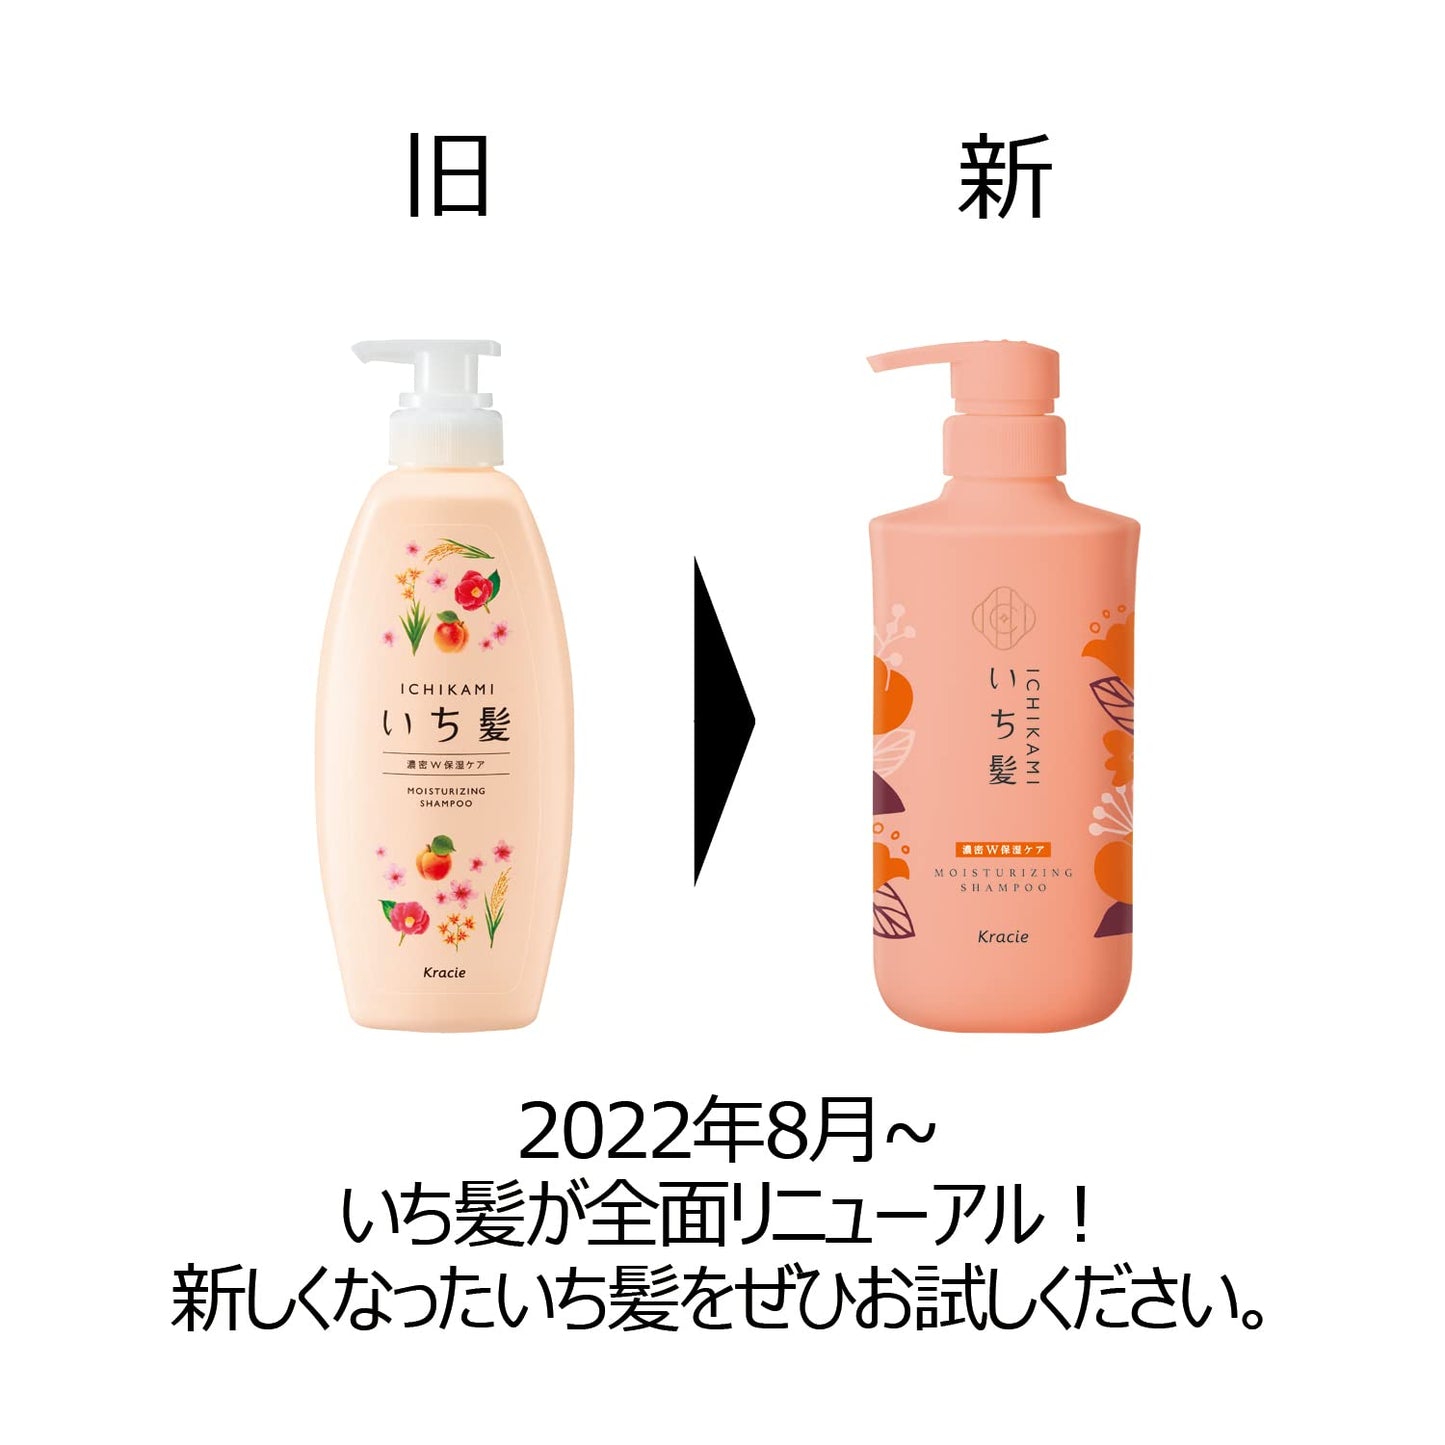 KRACIE Ichikami Moisture Shampoo and Conditioner Set 480ml+480g (Refill available)